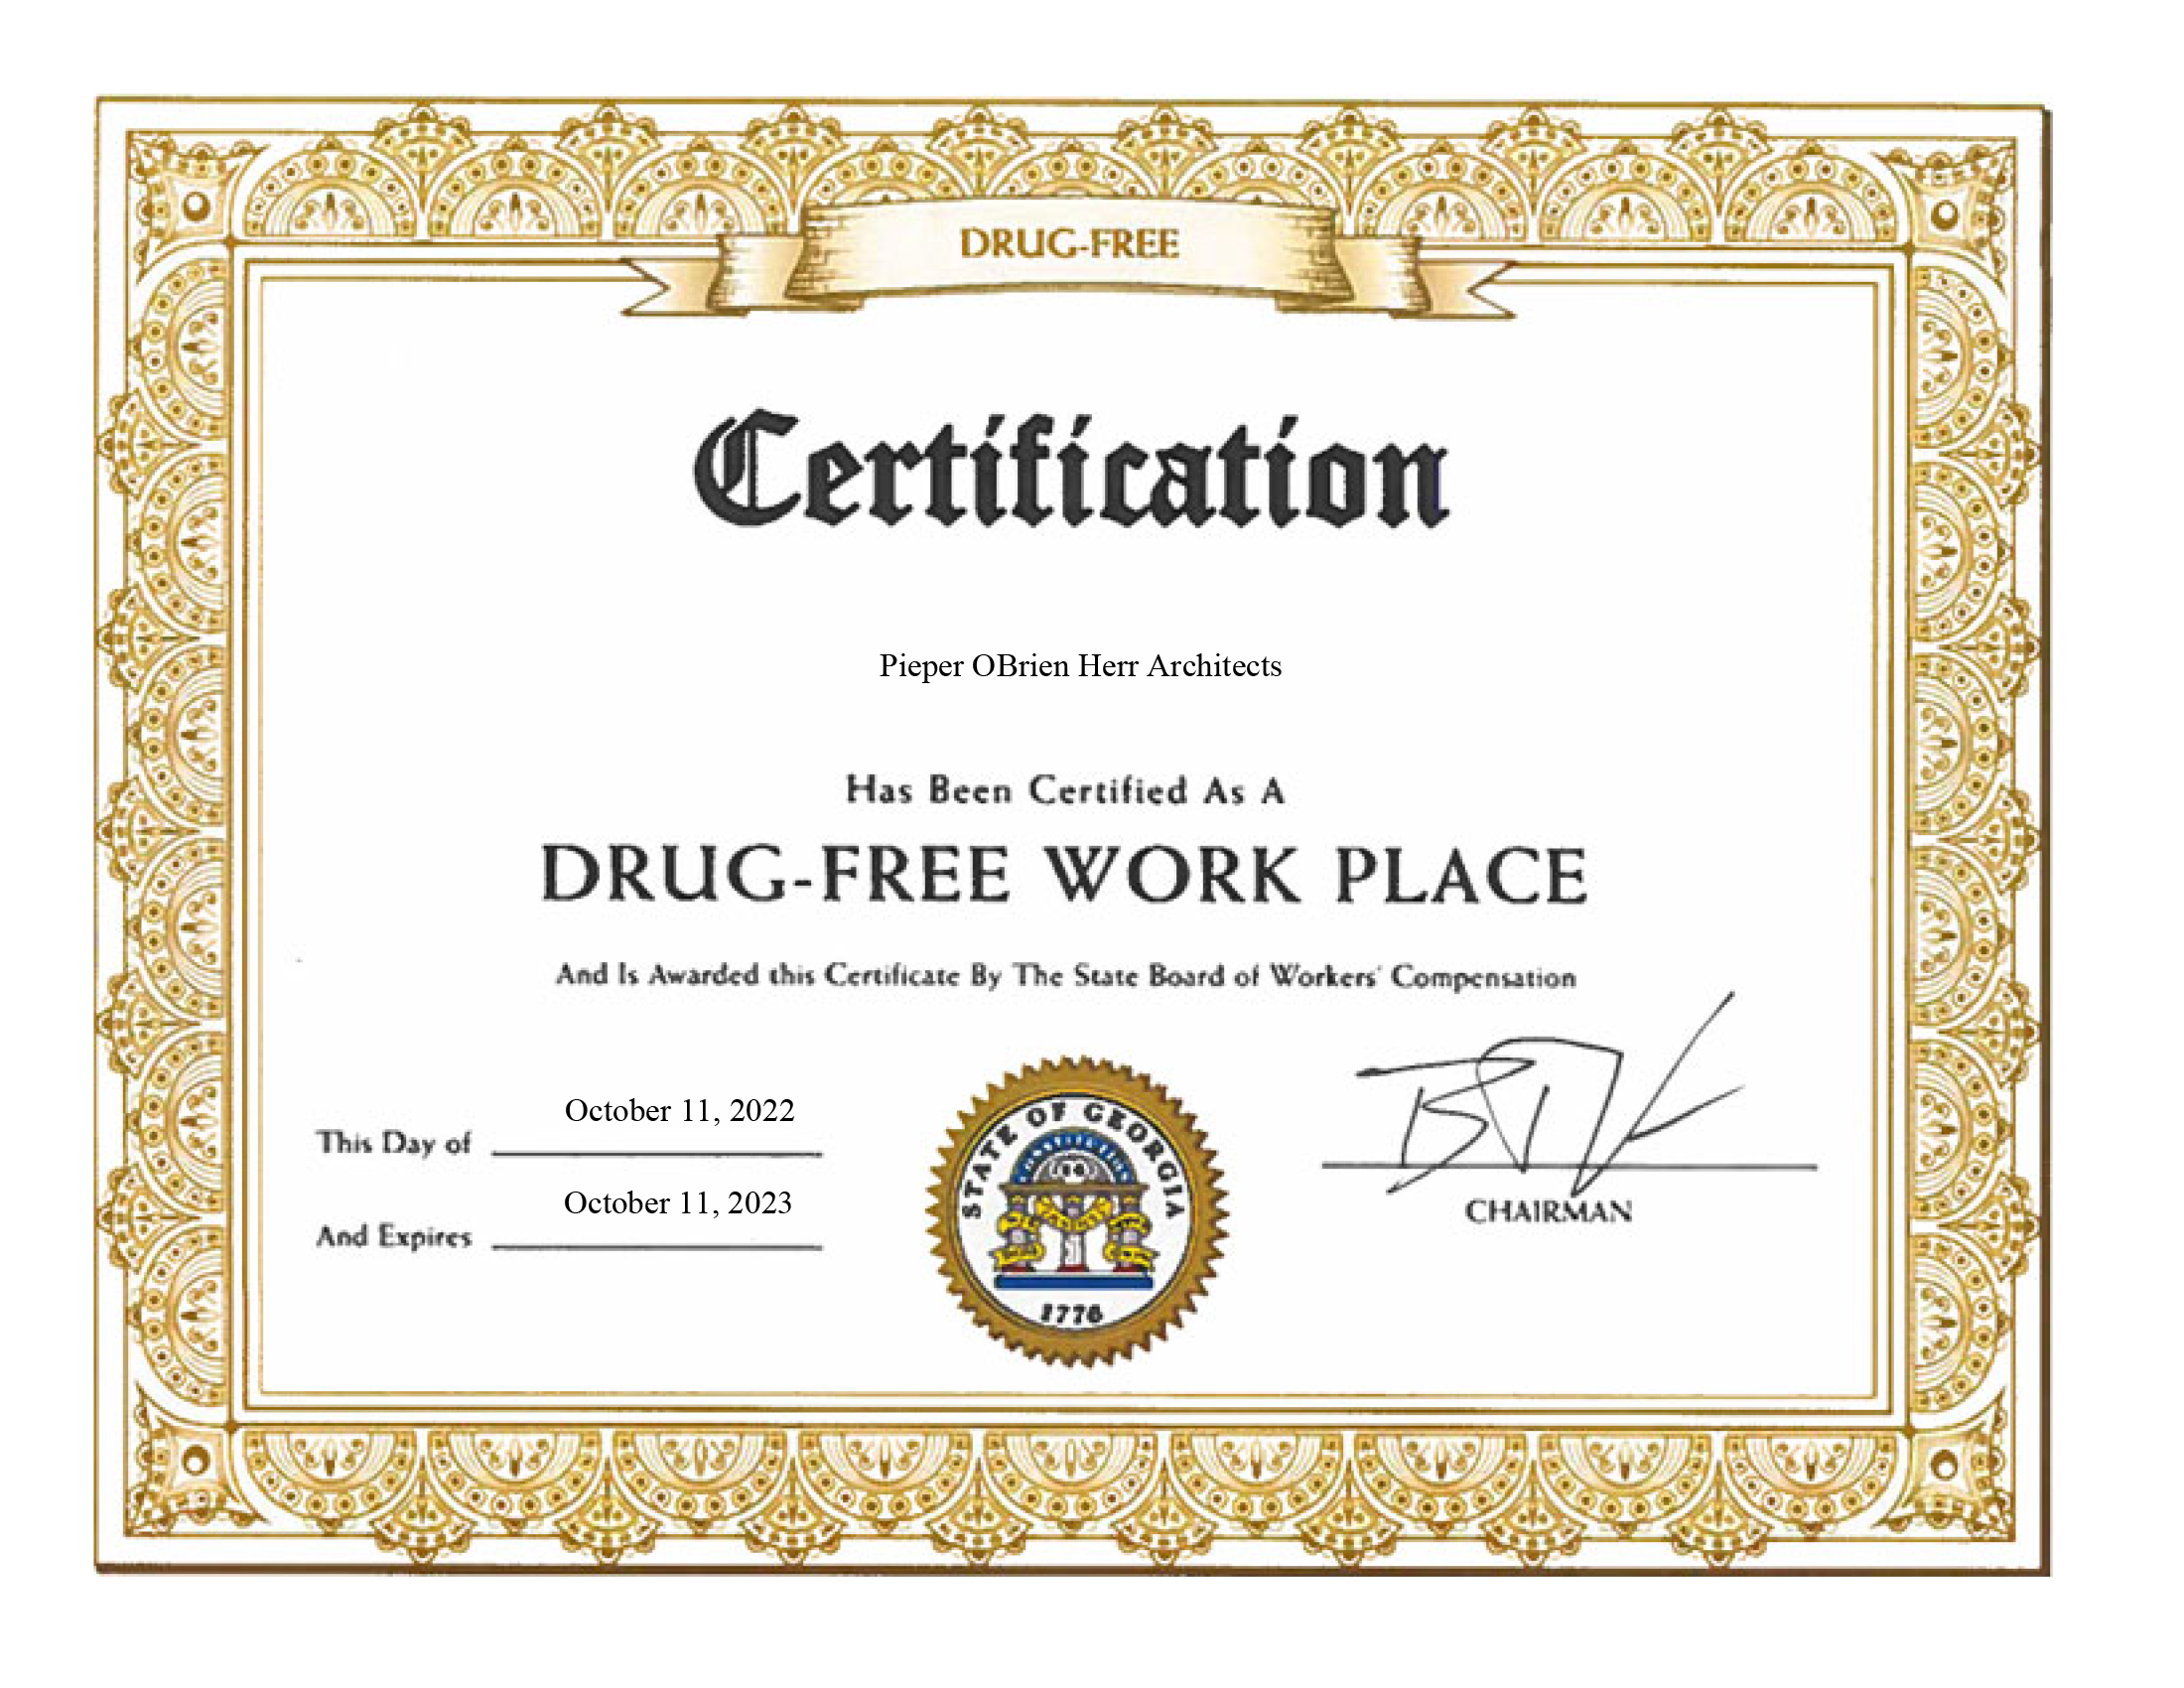 Drug-Free Work Place - 1022-1023